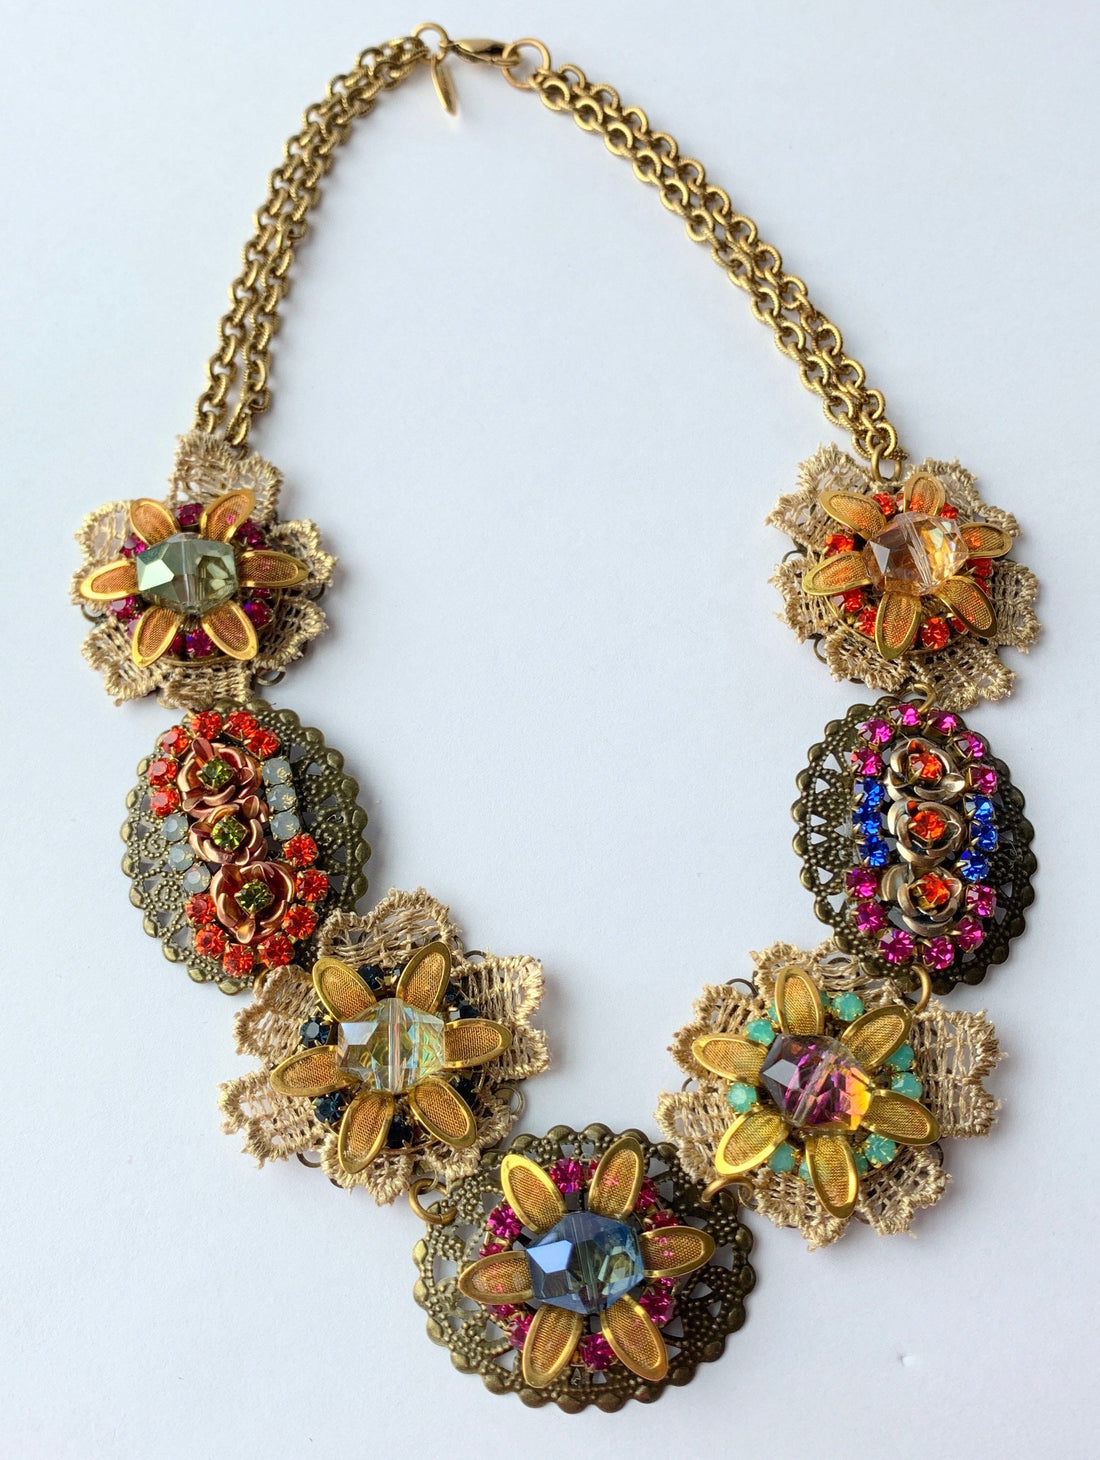 Lenora Dame Bejeweled Detailed Vintage Inspired Bib Necklace in Jewel Tones